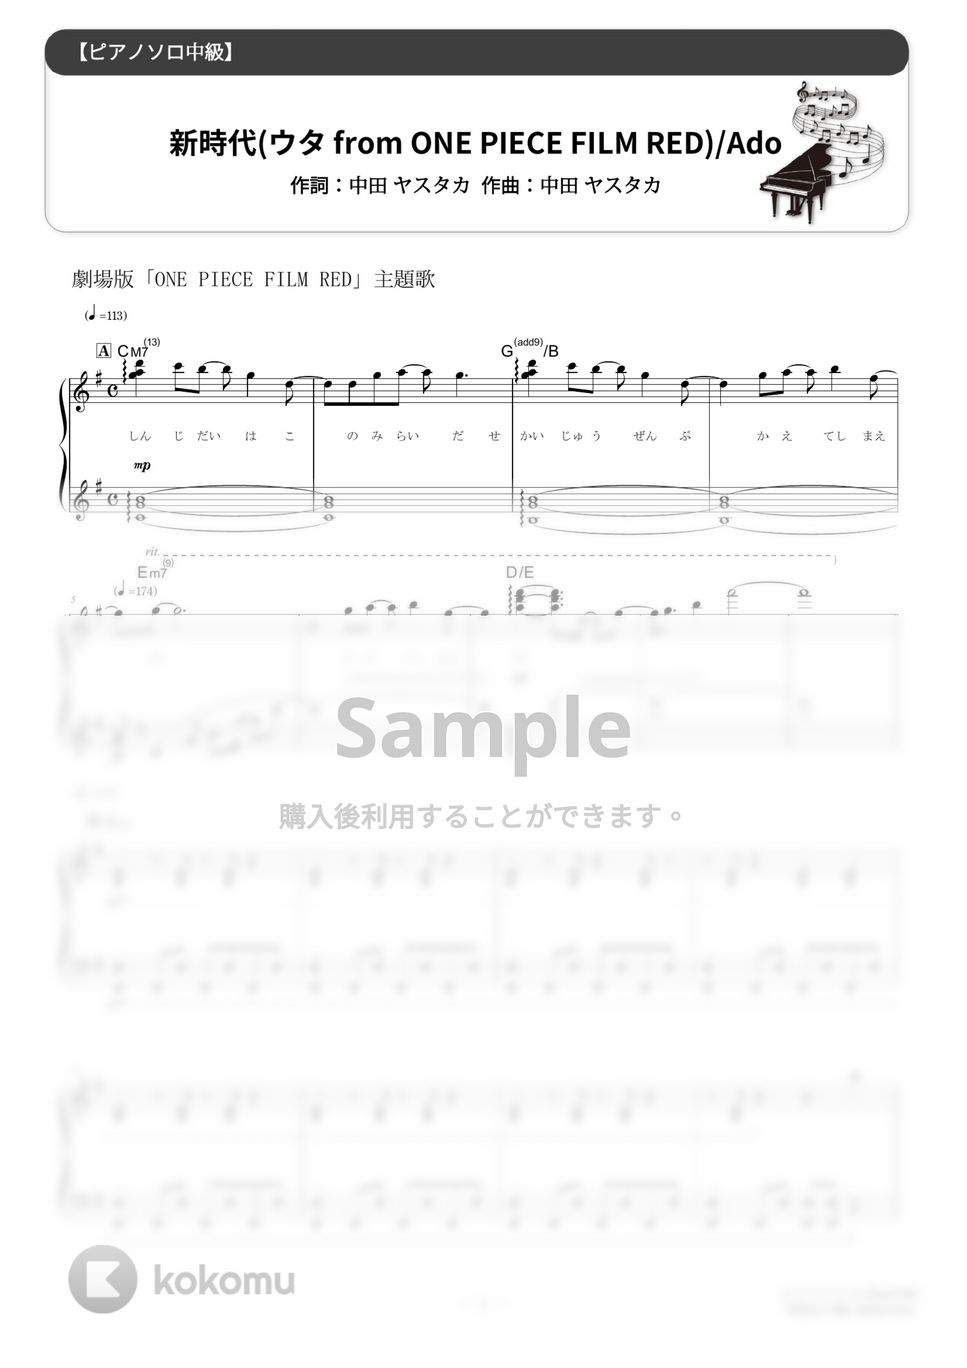 Ado - 新時代 (難易度：★★★☆☆/映画『ONE PIECE FILM RED』主題歌) by Dさん